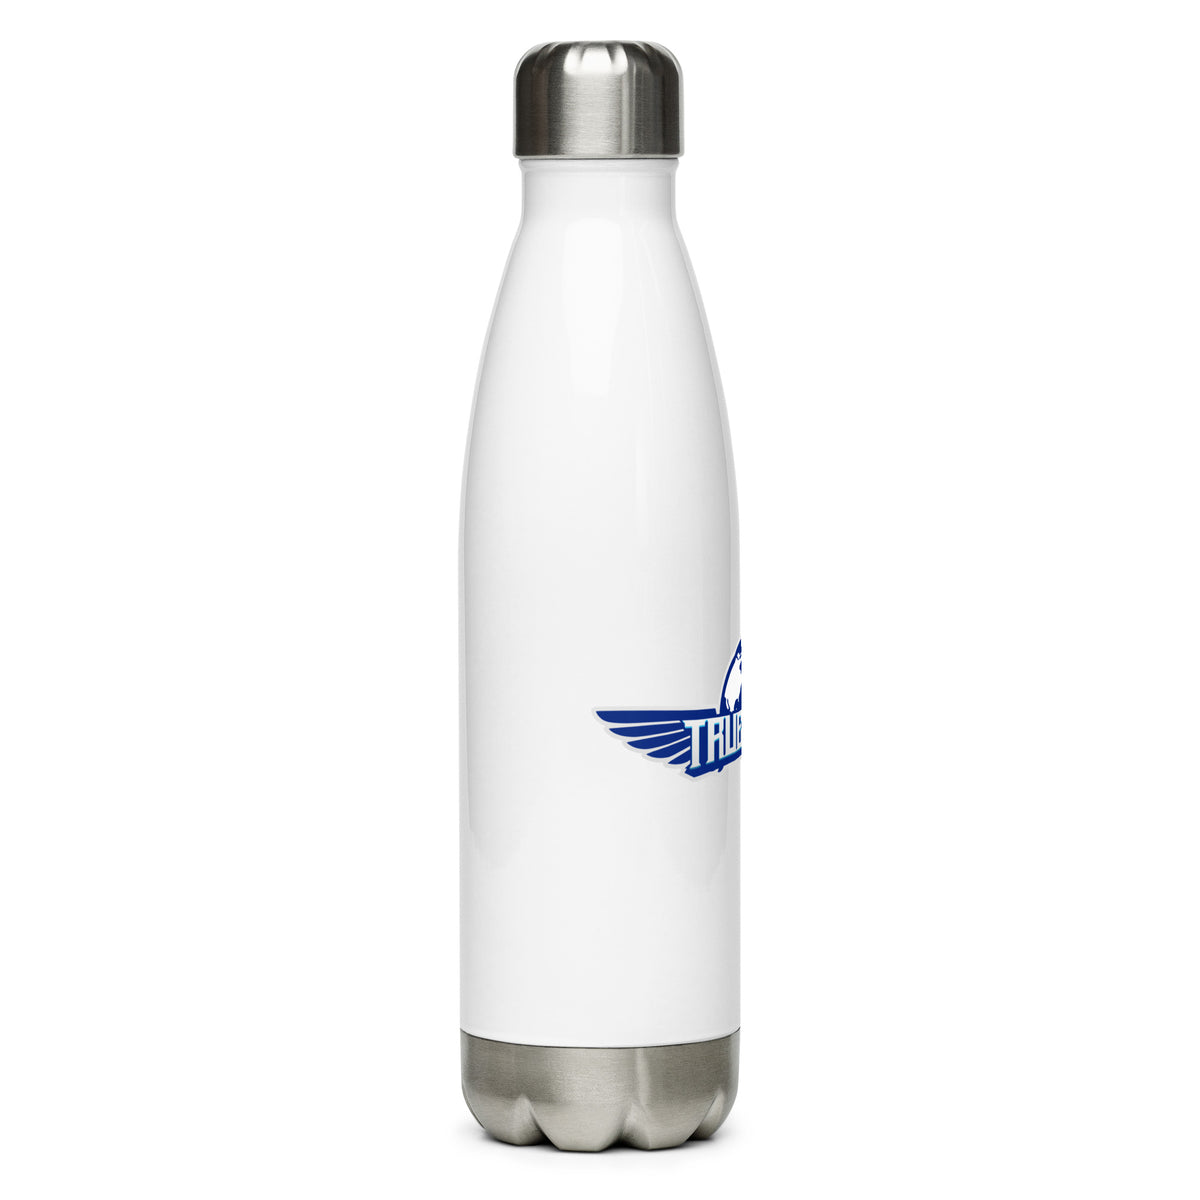 TG Stainless Steel Water Bottle